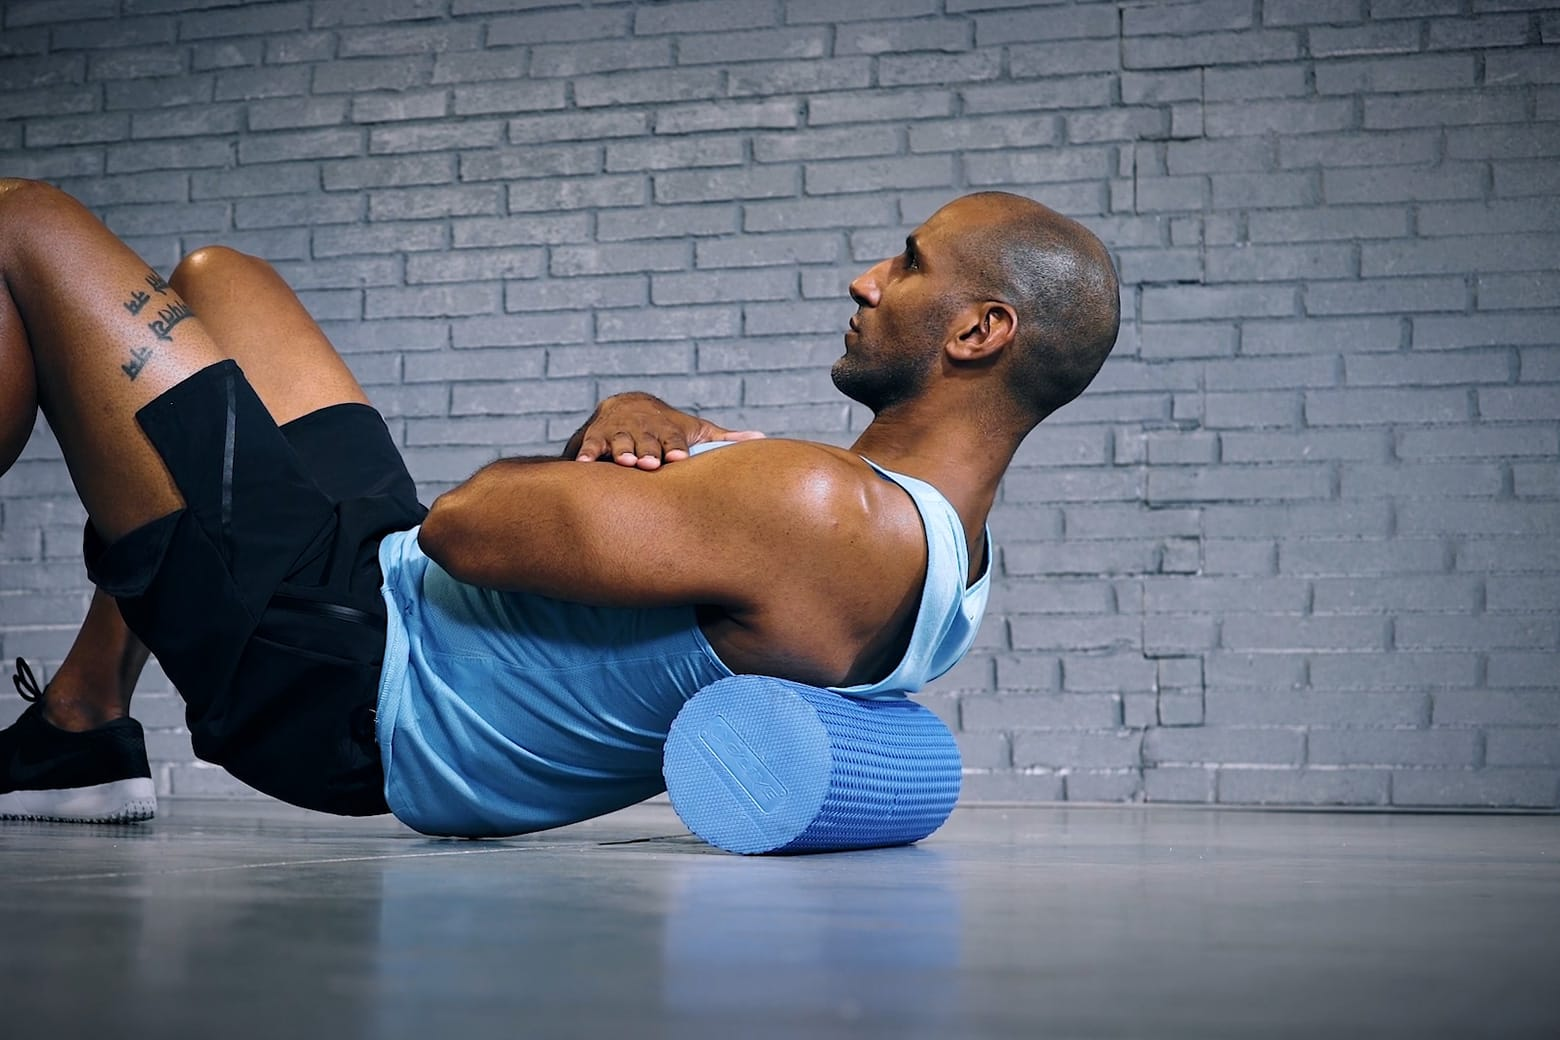 7 Best Foam Roller Exercises for Back and Shoulders